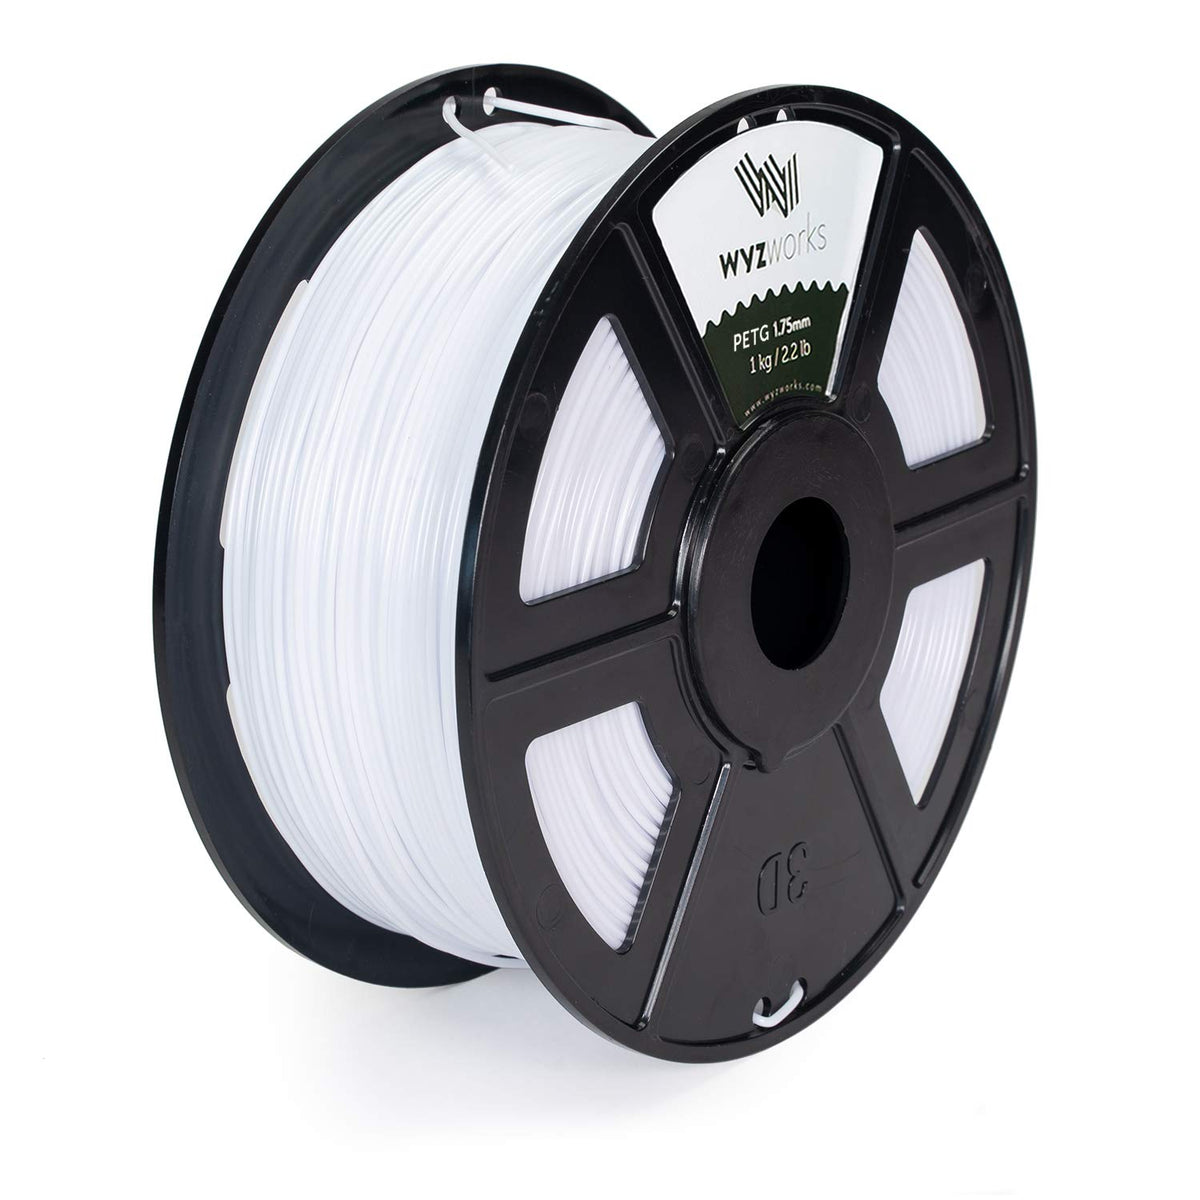 WYZworks PETG 1.75mm (White) Premium 3D Printer Filament - Dimensional Accuracy +/- 0.05mm 1kg/2.2lb + [ Multiple Color Options Available ]